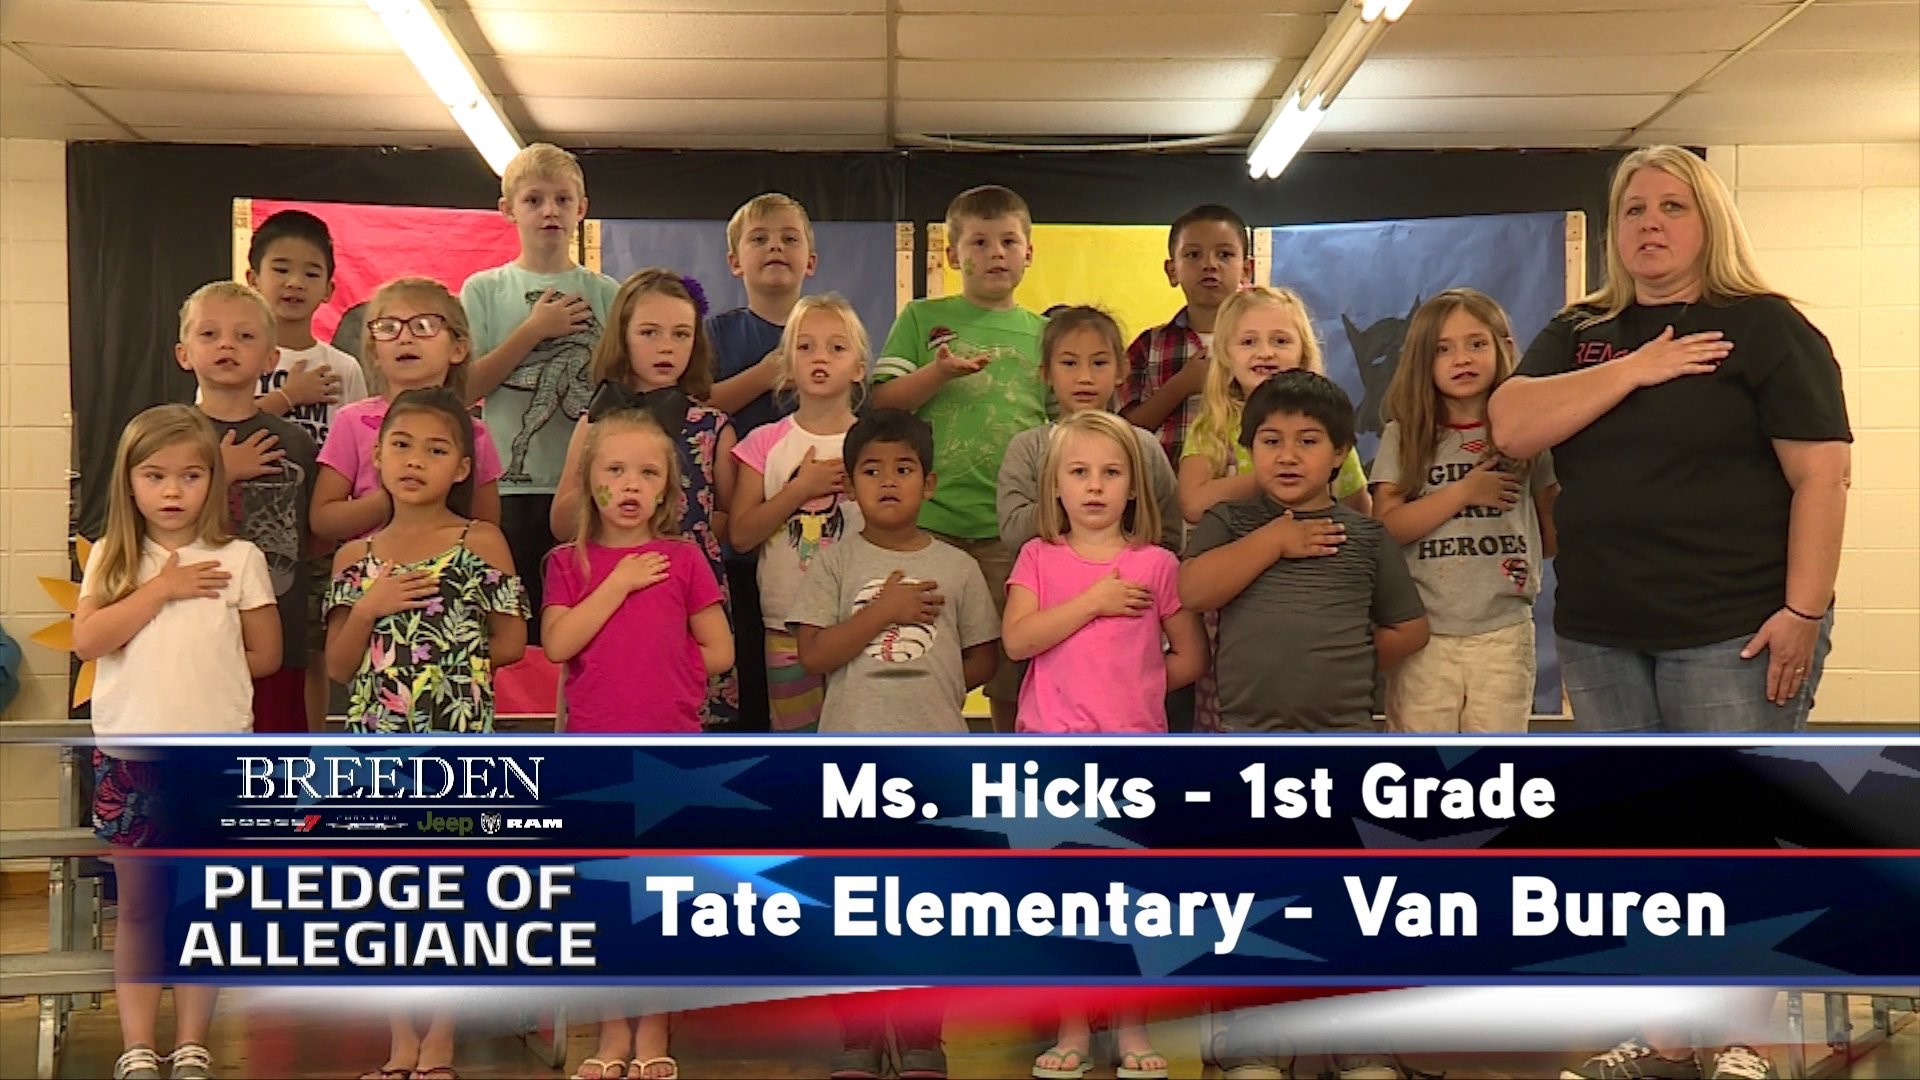 Ms. Hicks  1st Grade Tat Elementary